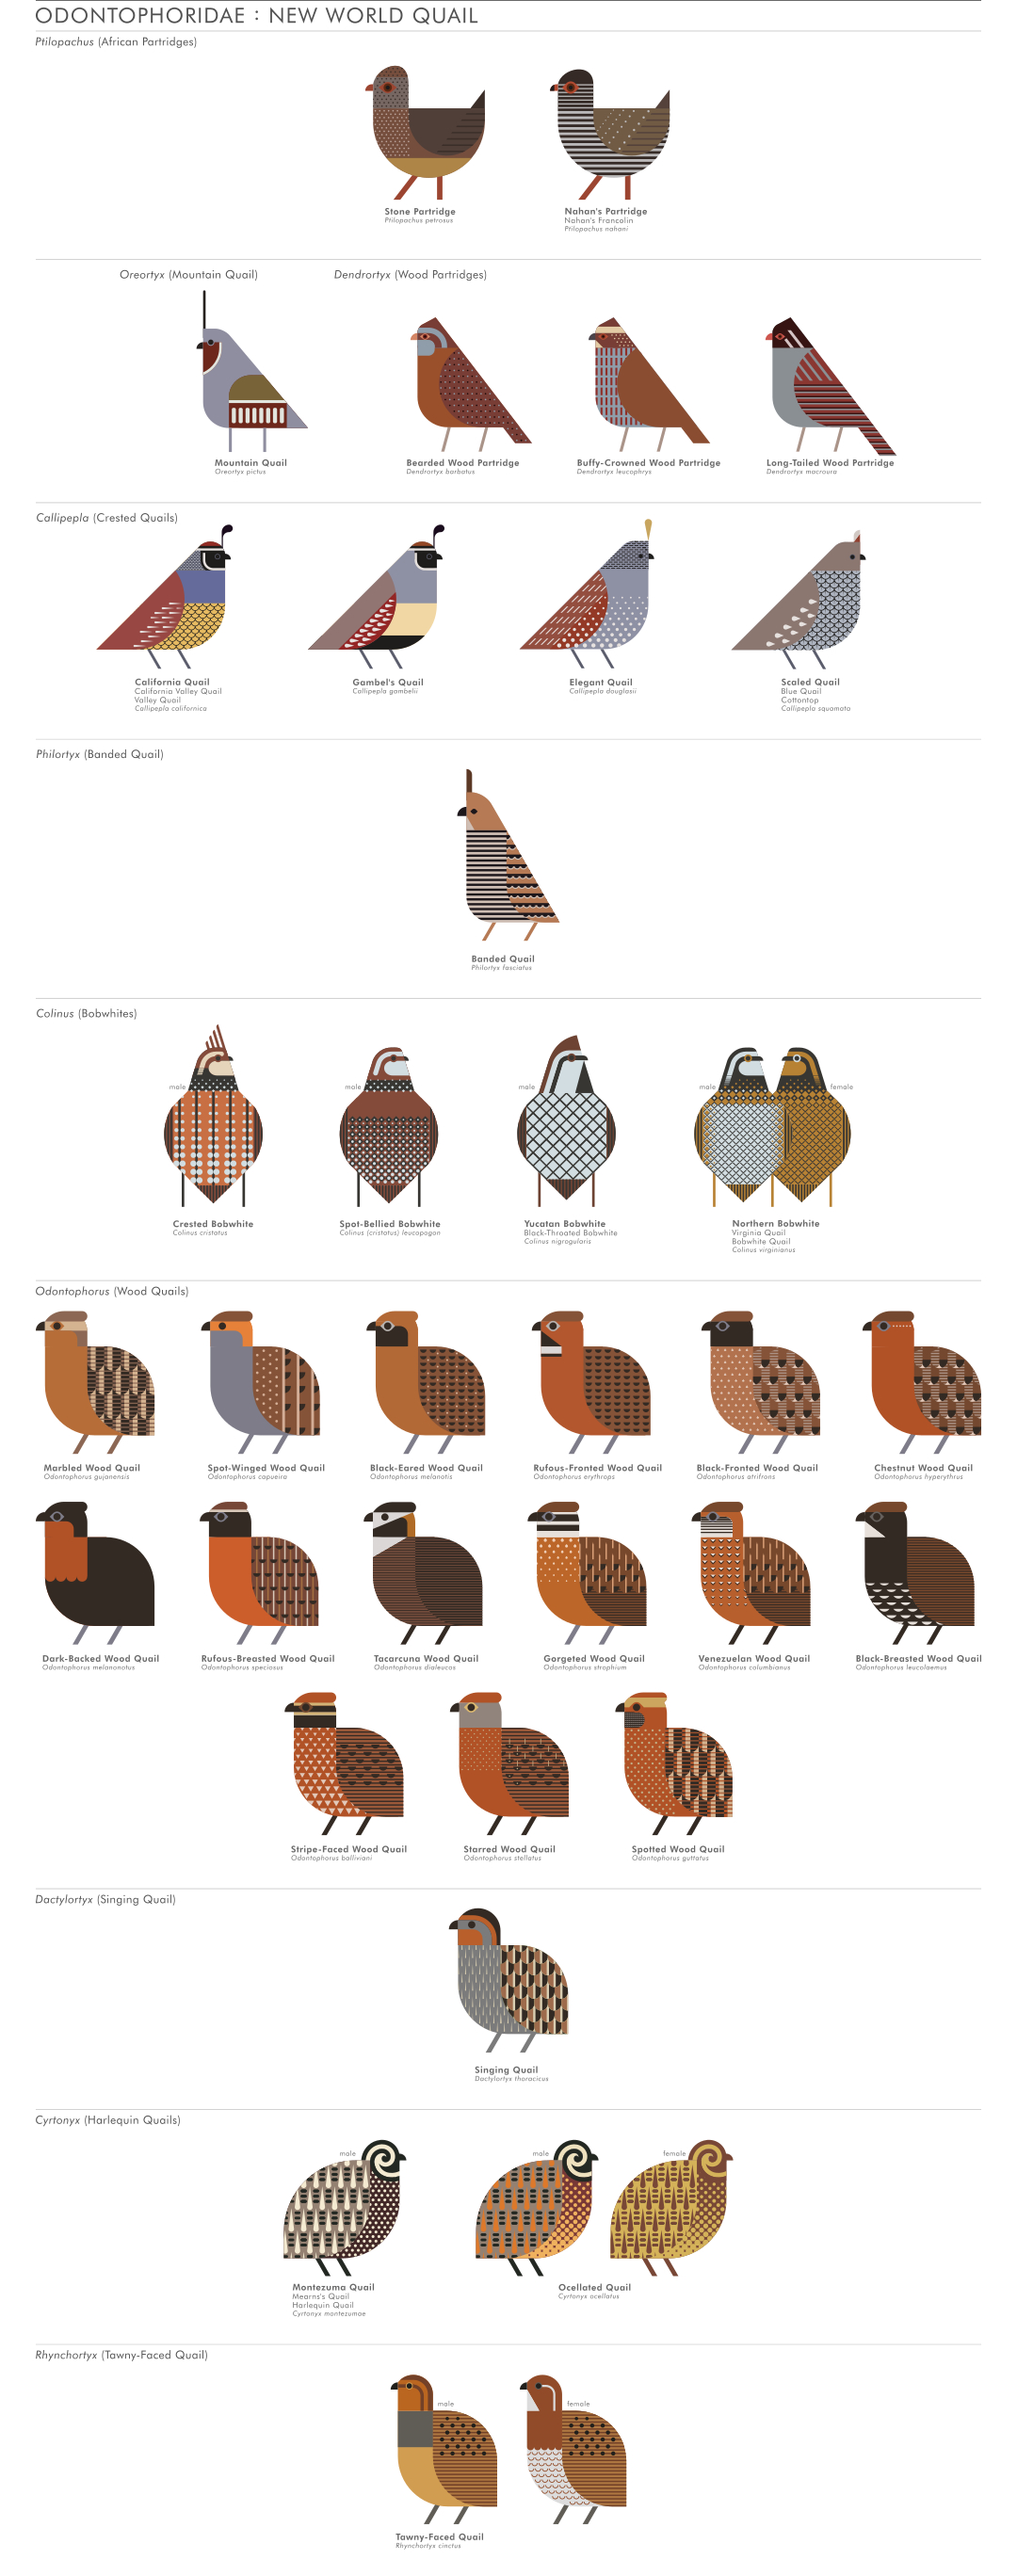 scott partridge - ave - avian vector encyclopedia - odontiphoridae - quail - bird vector art